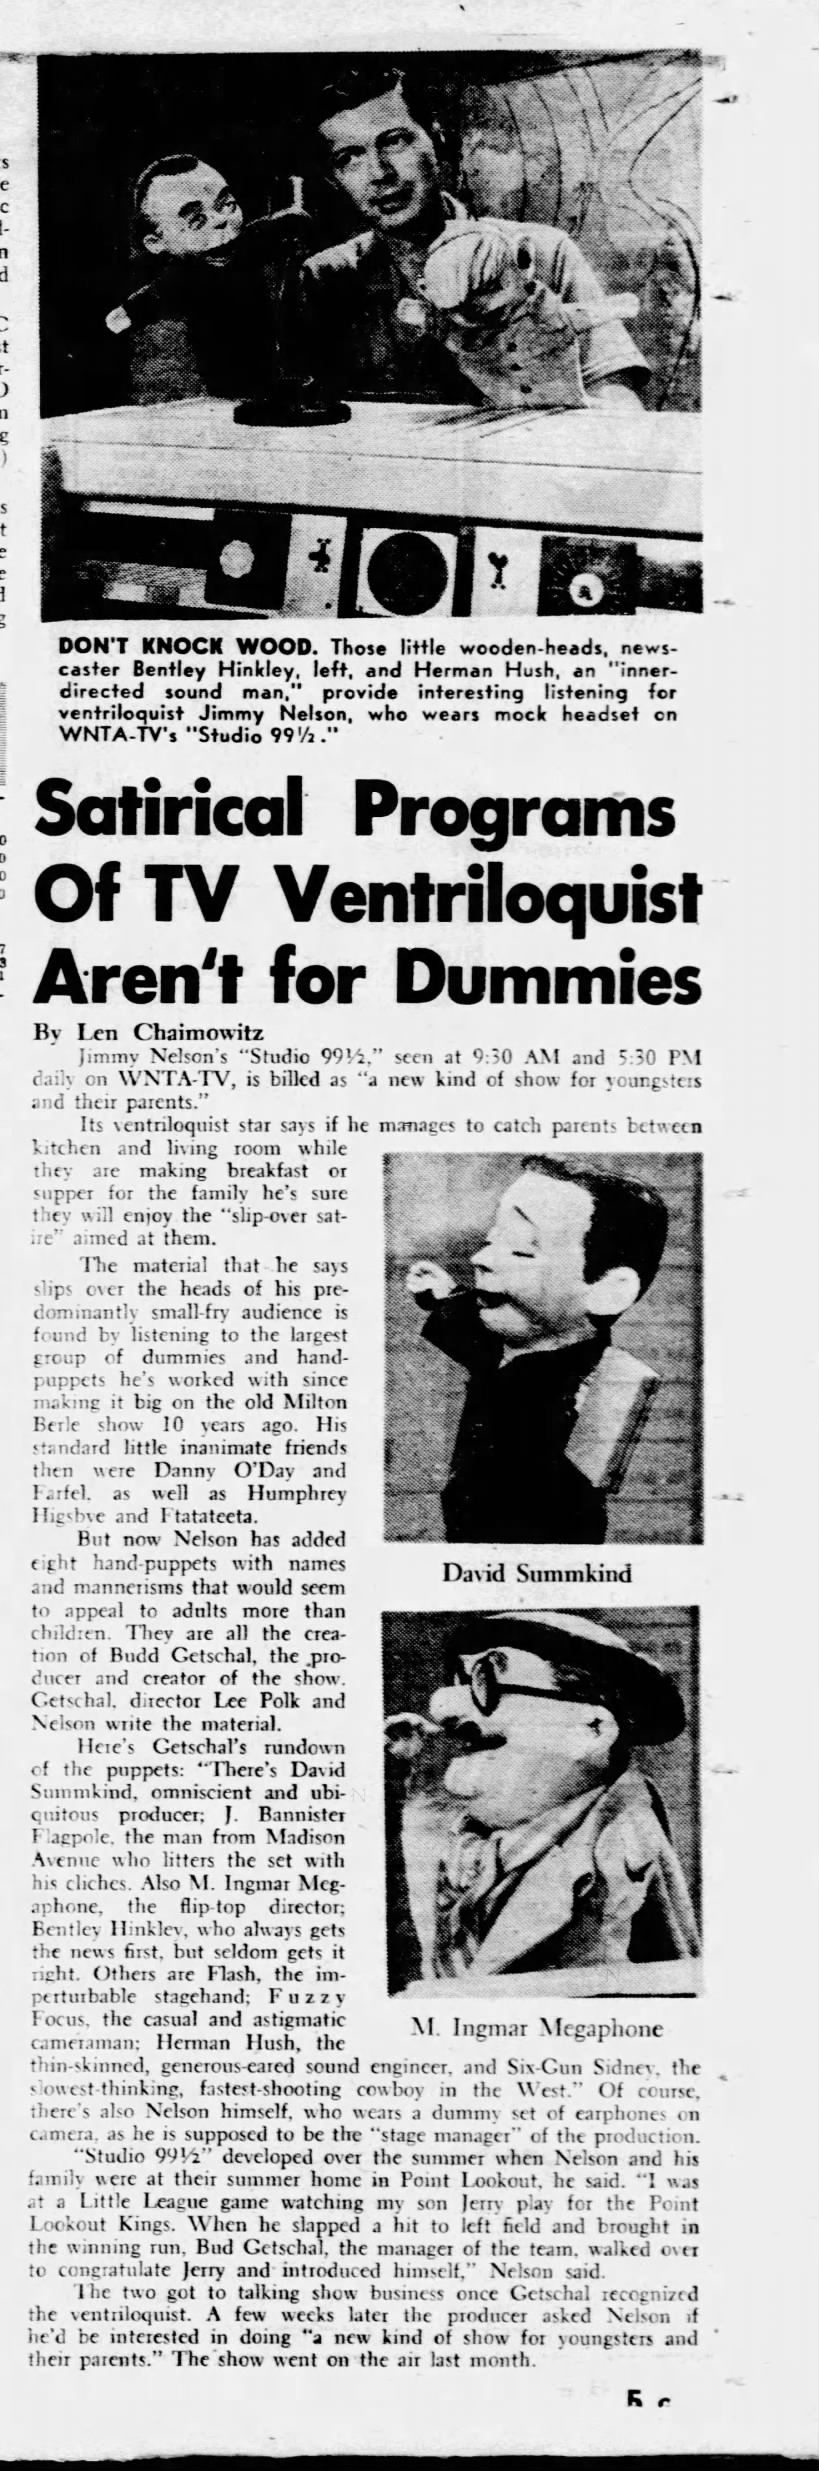 Lee Chaimowitz, "Satirical Programs Of TV Ventrilioquist Aren't for Dummies," Newsday, 10/26/60